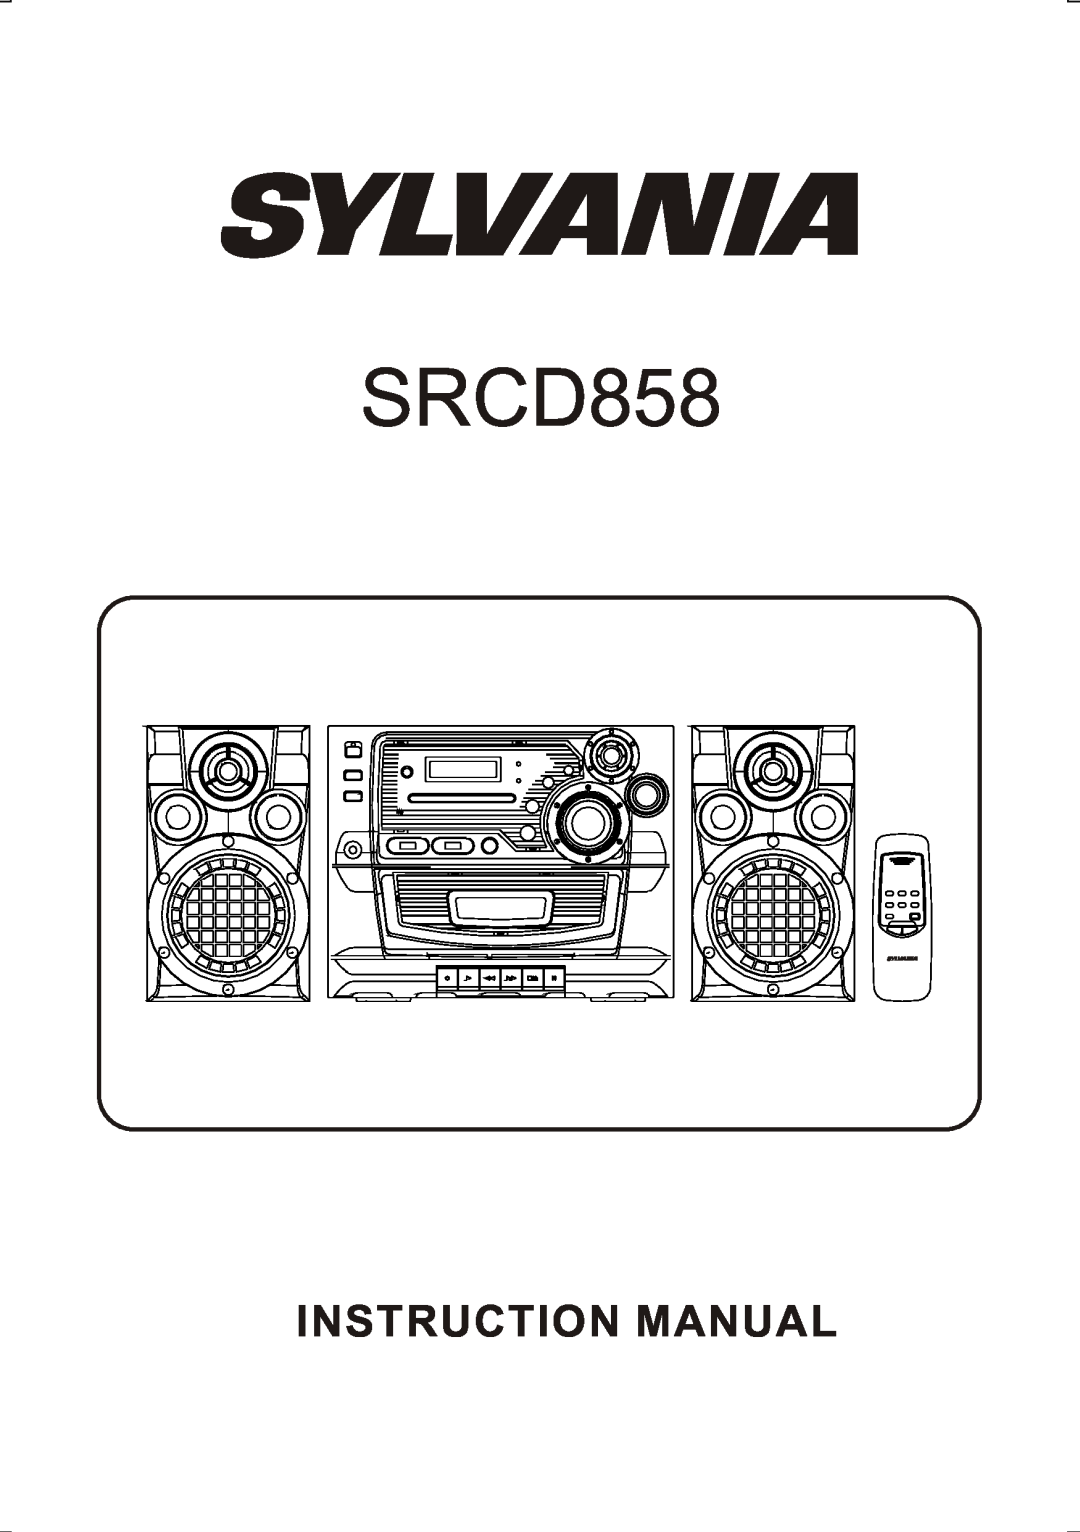 Sylvania SRCD858 instruction manual 